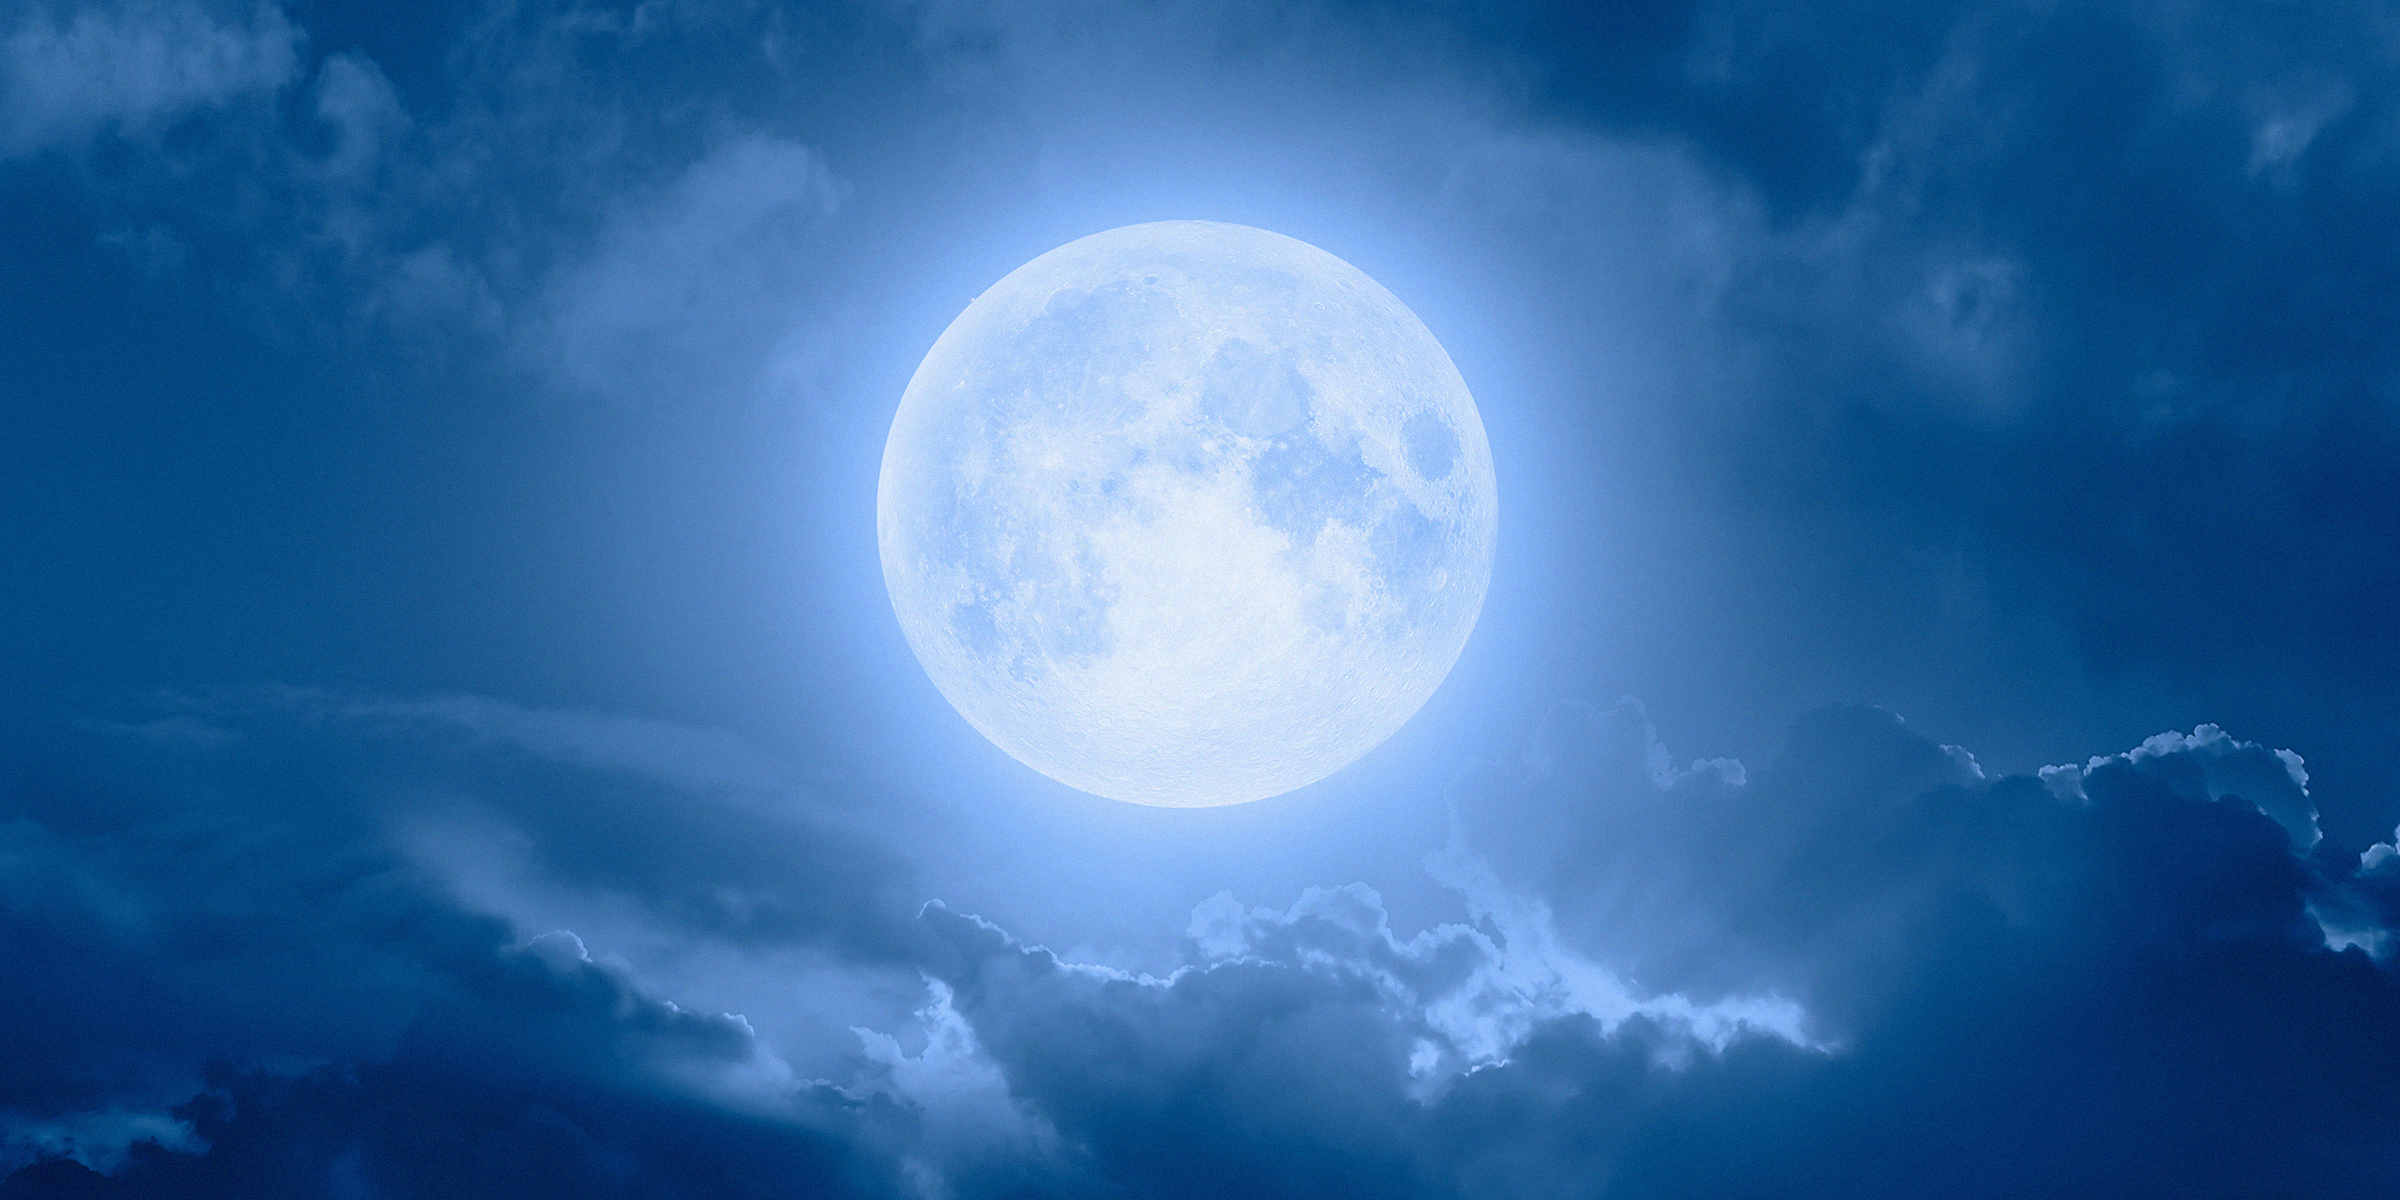 The moon | Source: Shutterstock